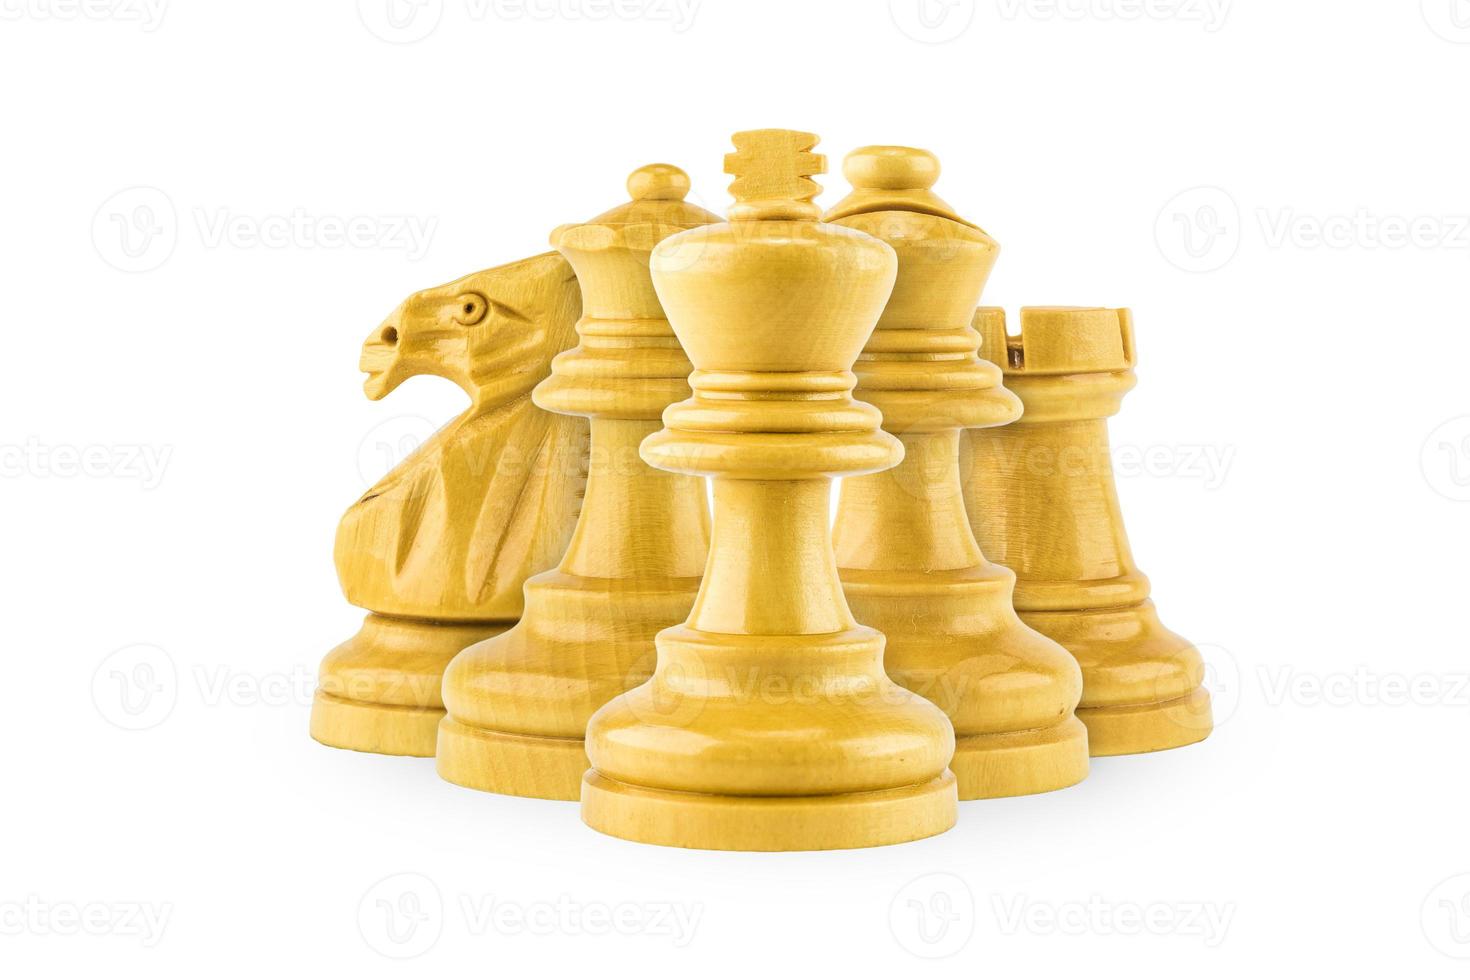 schaakfiguur op witte achtergrond foto